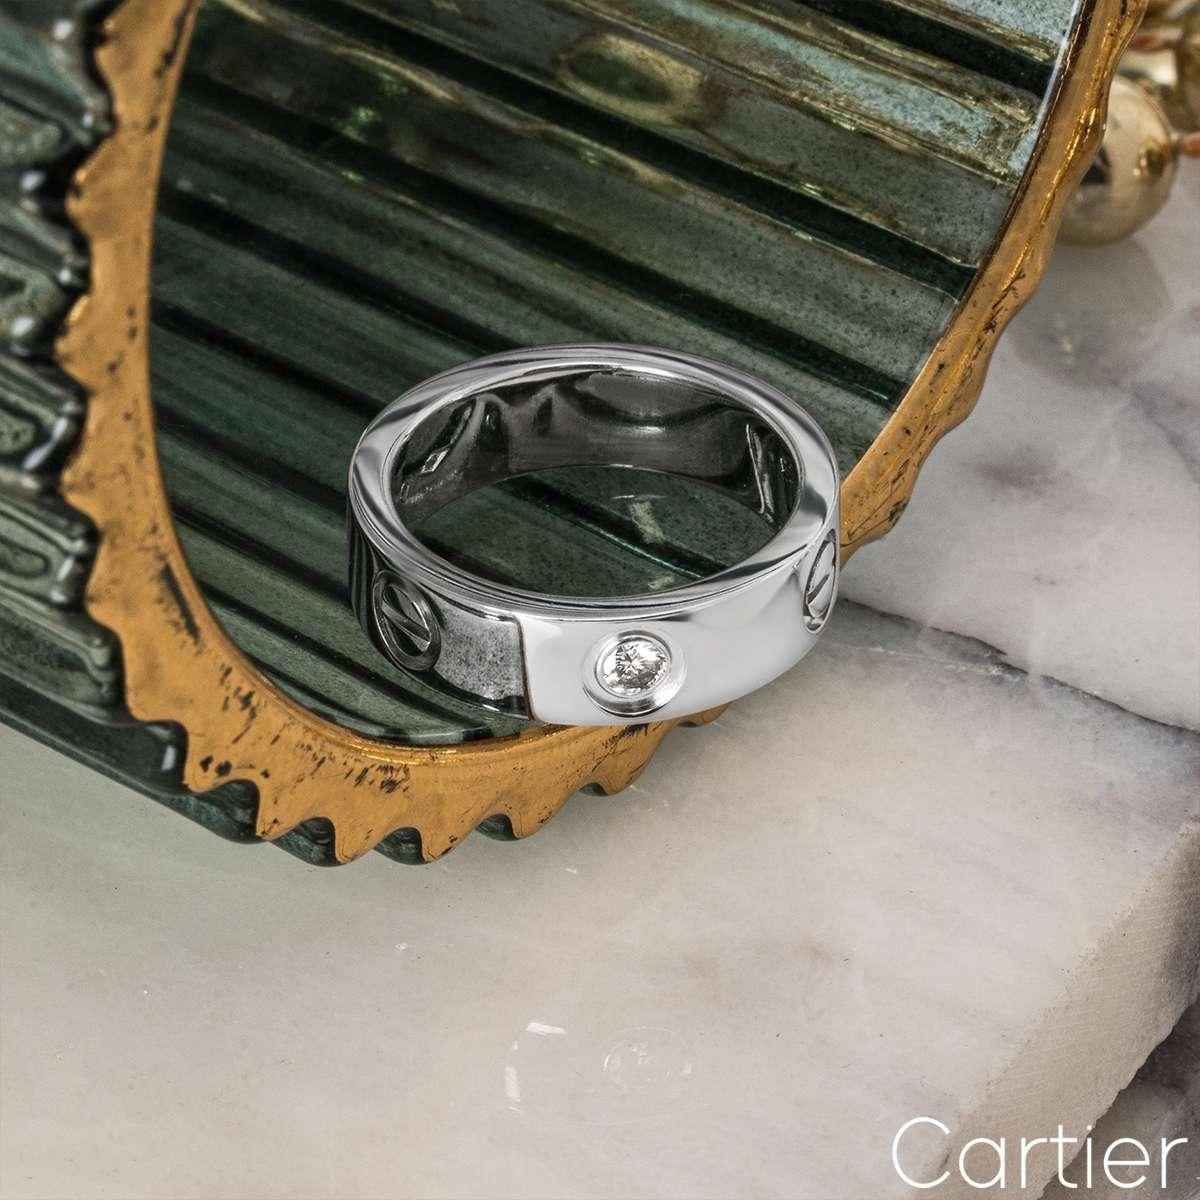 Cartier Platinum Diamond Love Ring Size 51 B4046700 For Sale 2